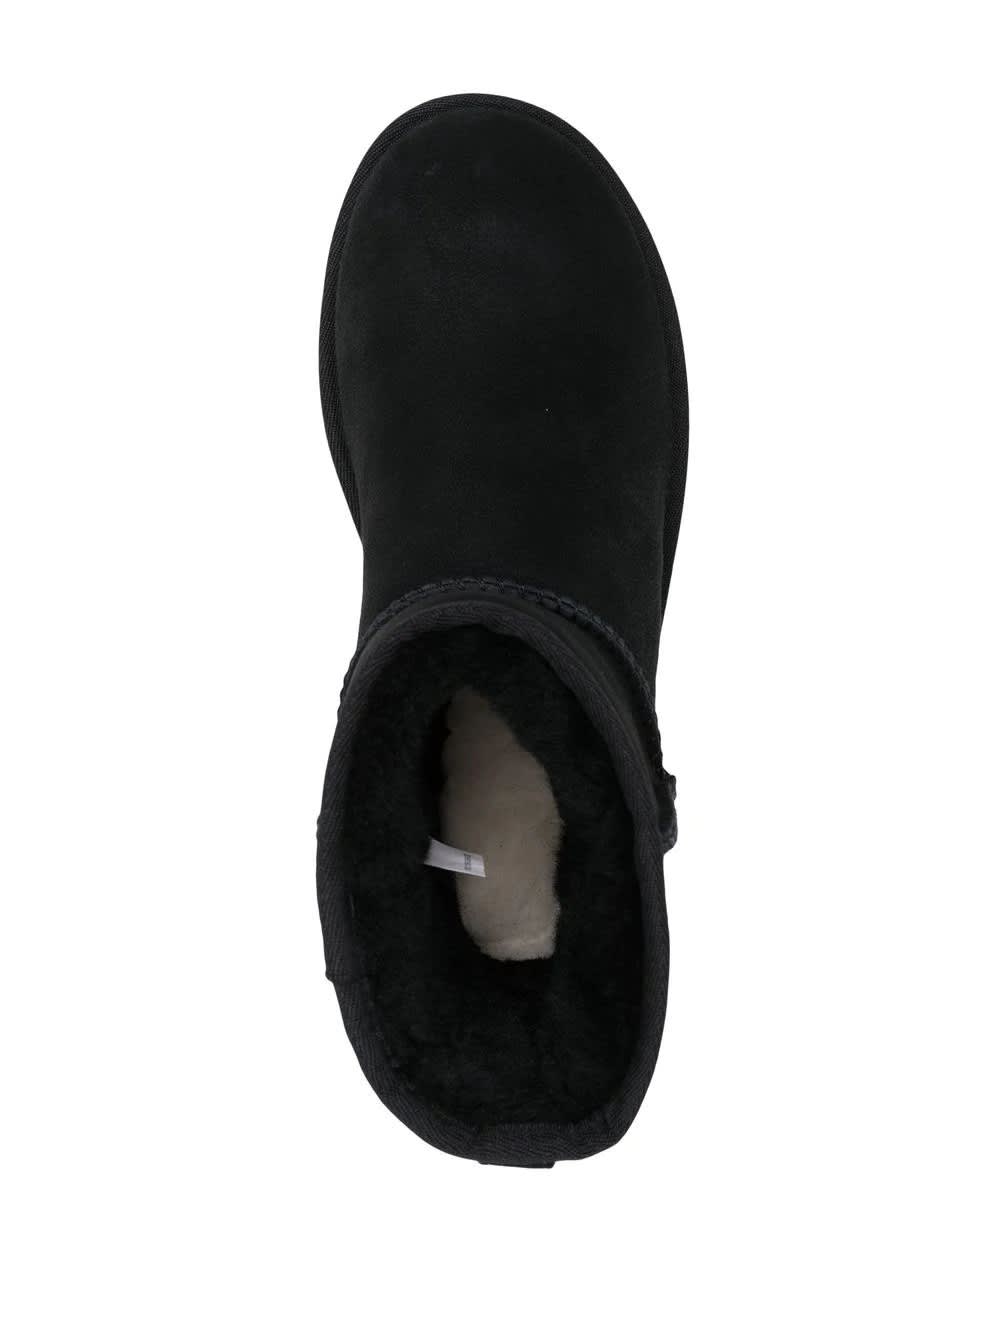 Shop Ugg Black Classic Mini Ii Boots In Blk Black